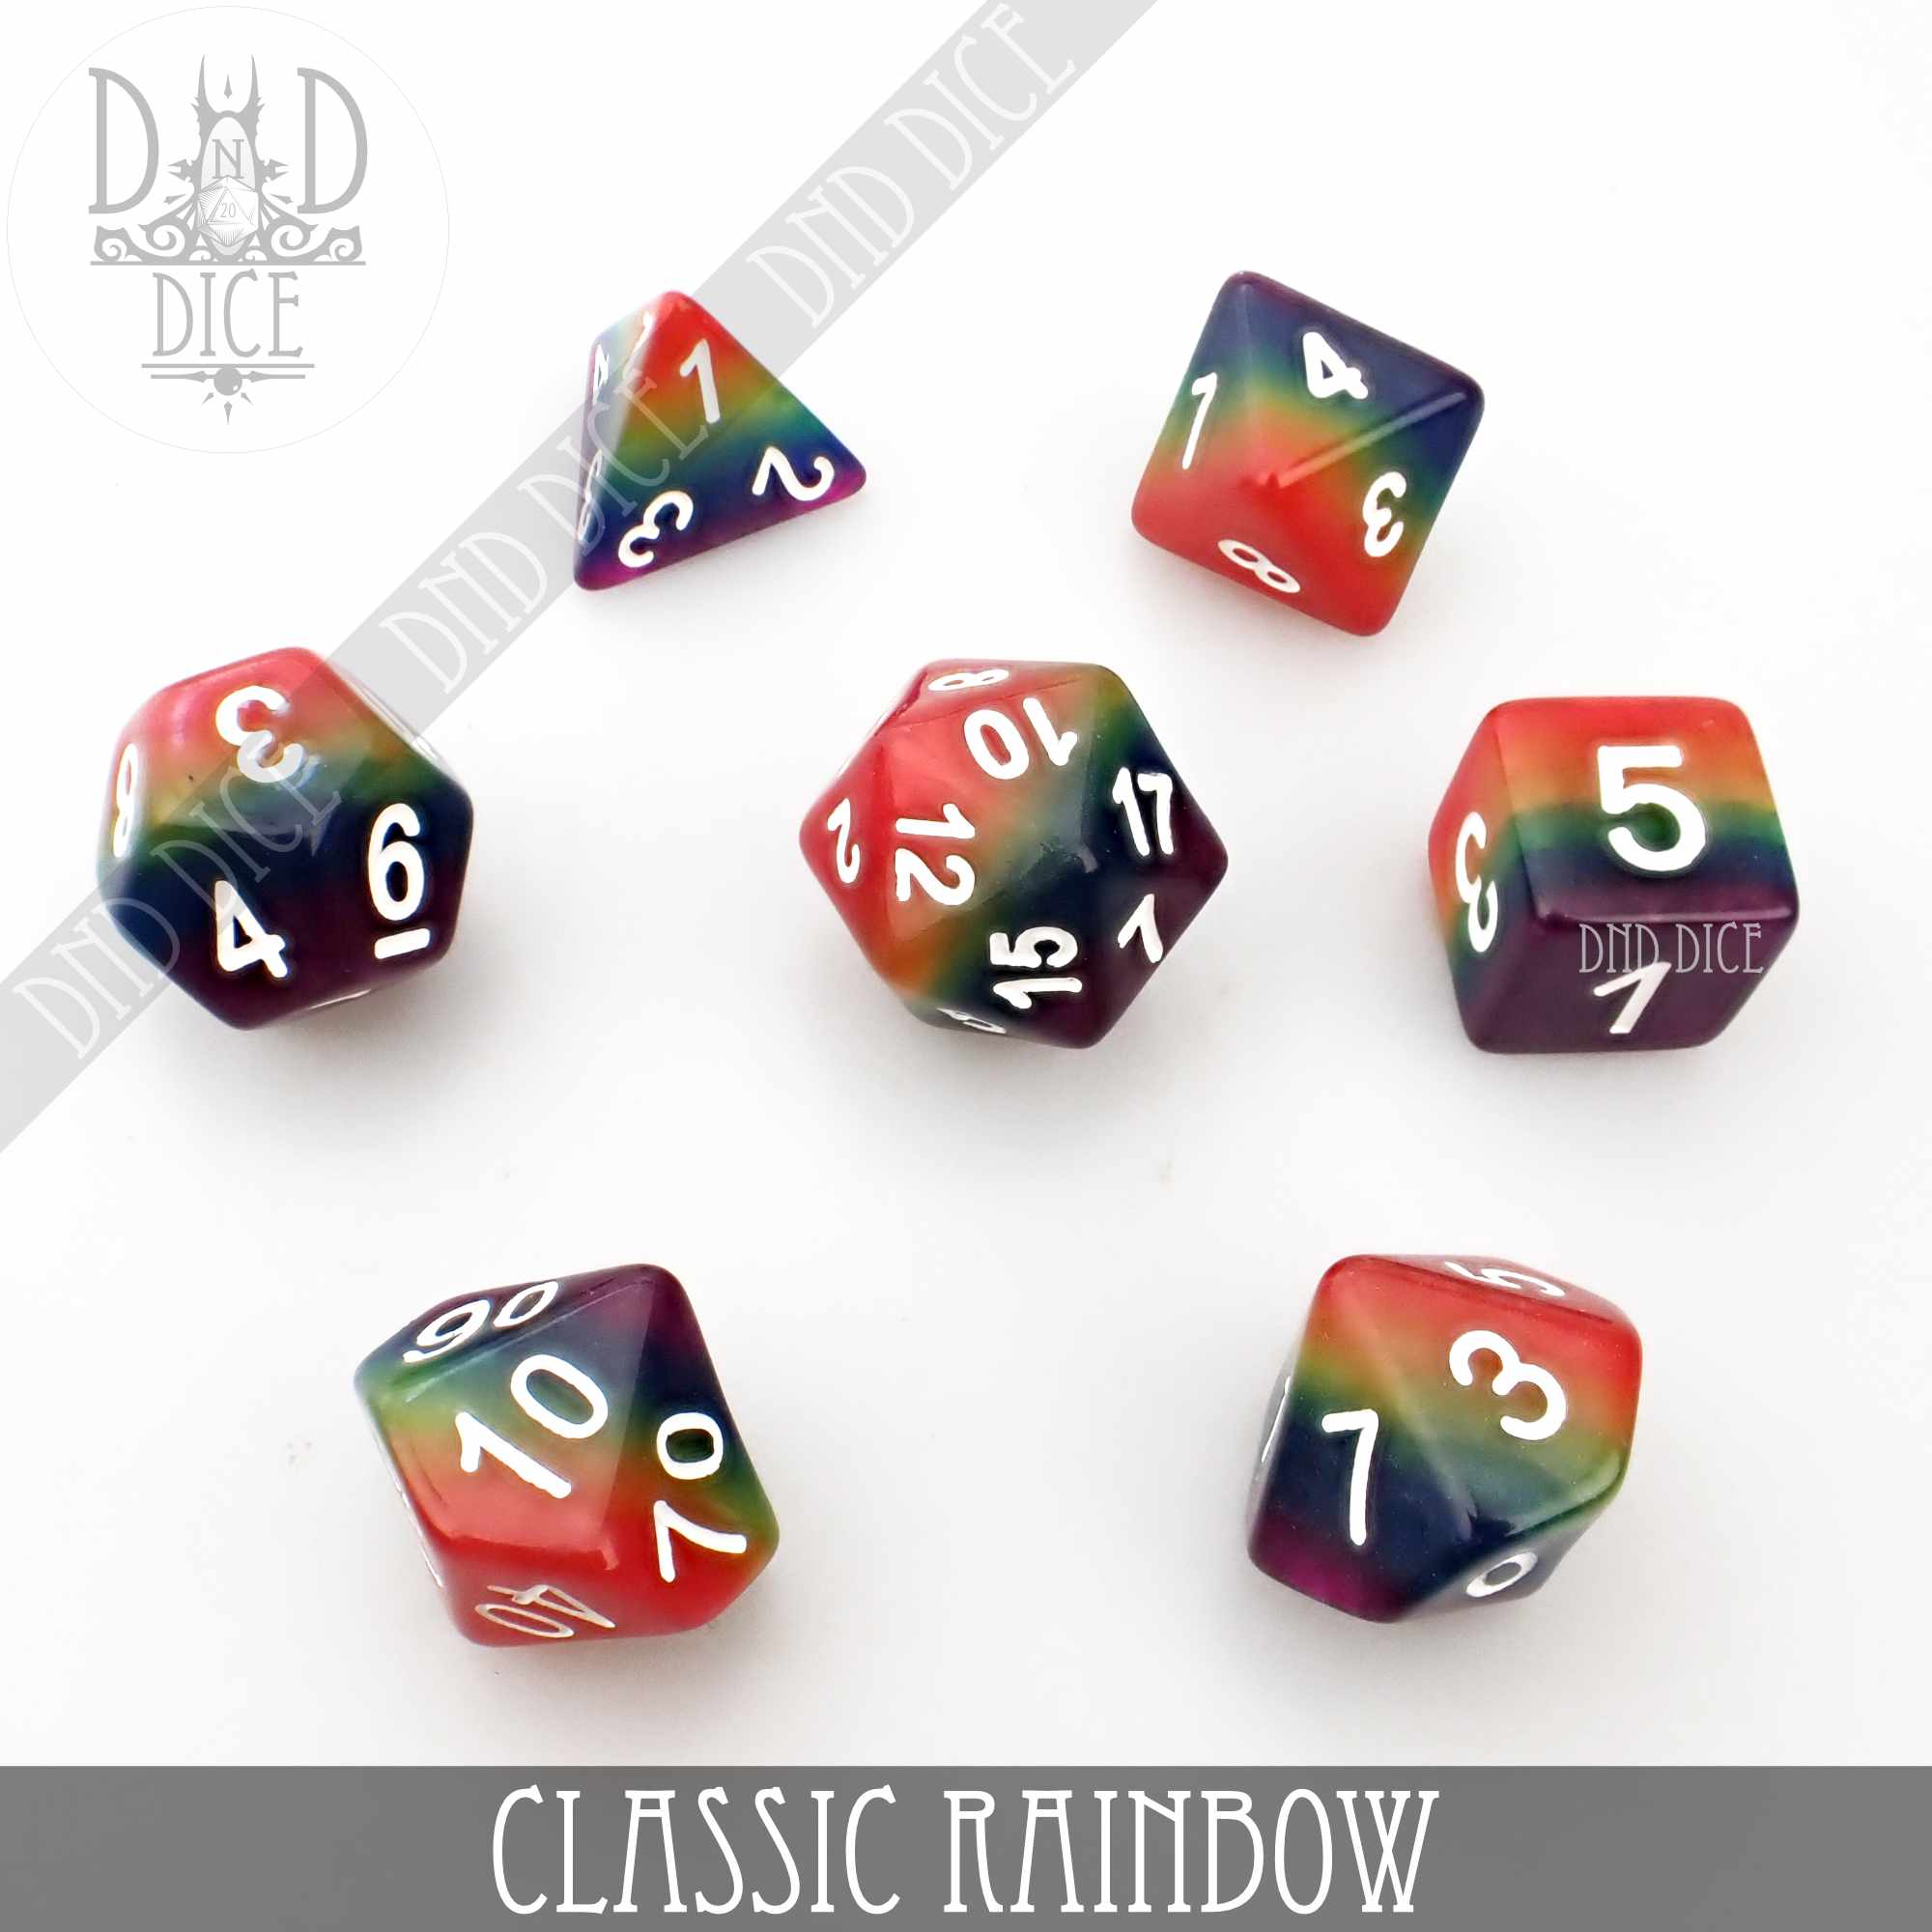 Classic Rainbow Dice Set